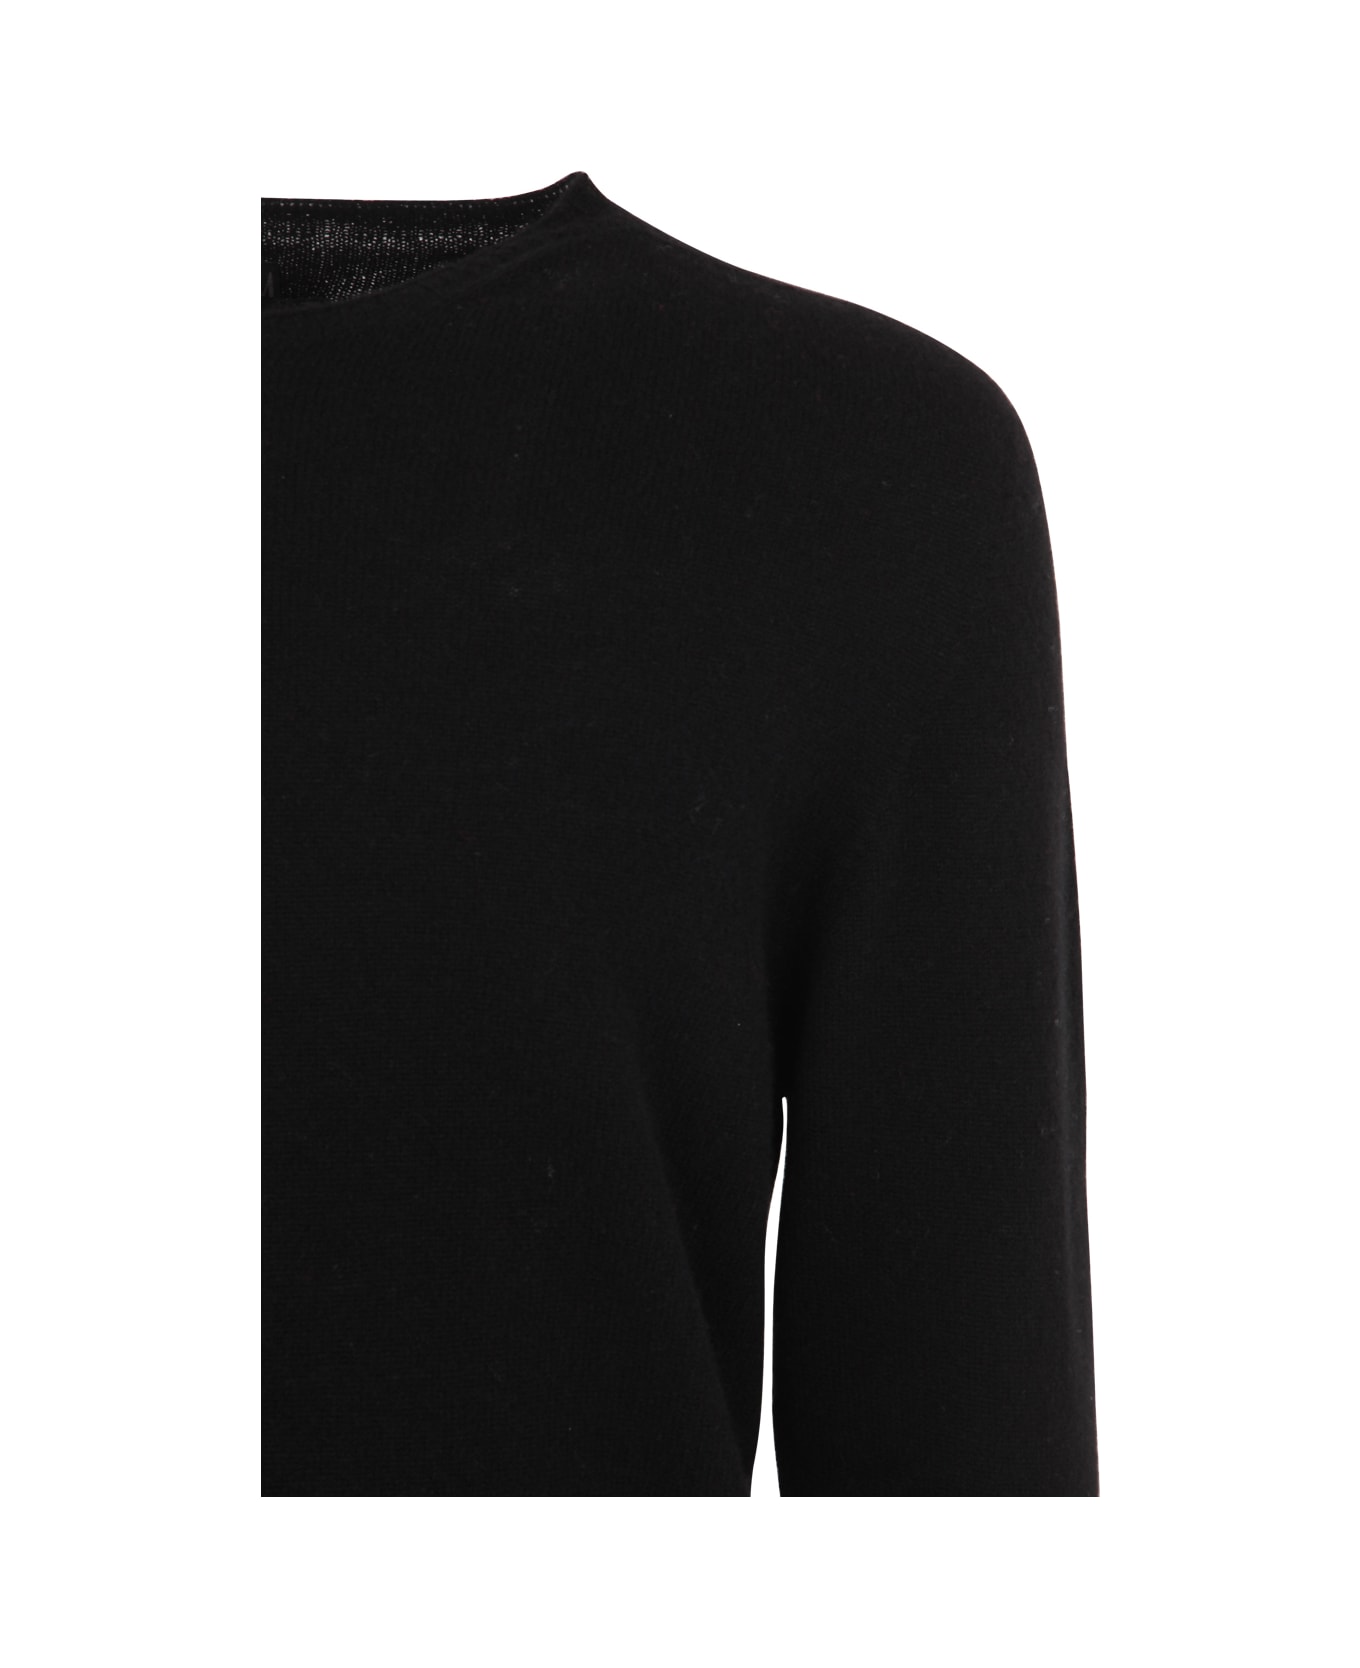 MD75 Cashmere Crew Neck Sweater - Black ニットウェア